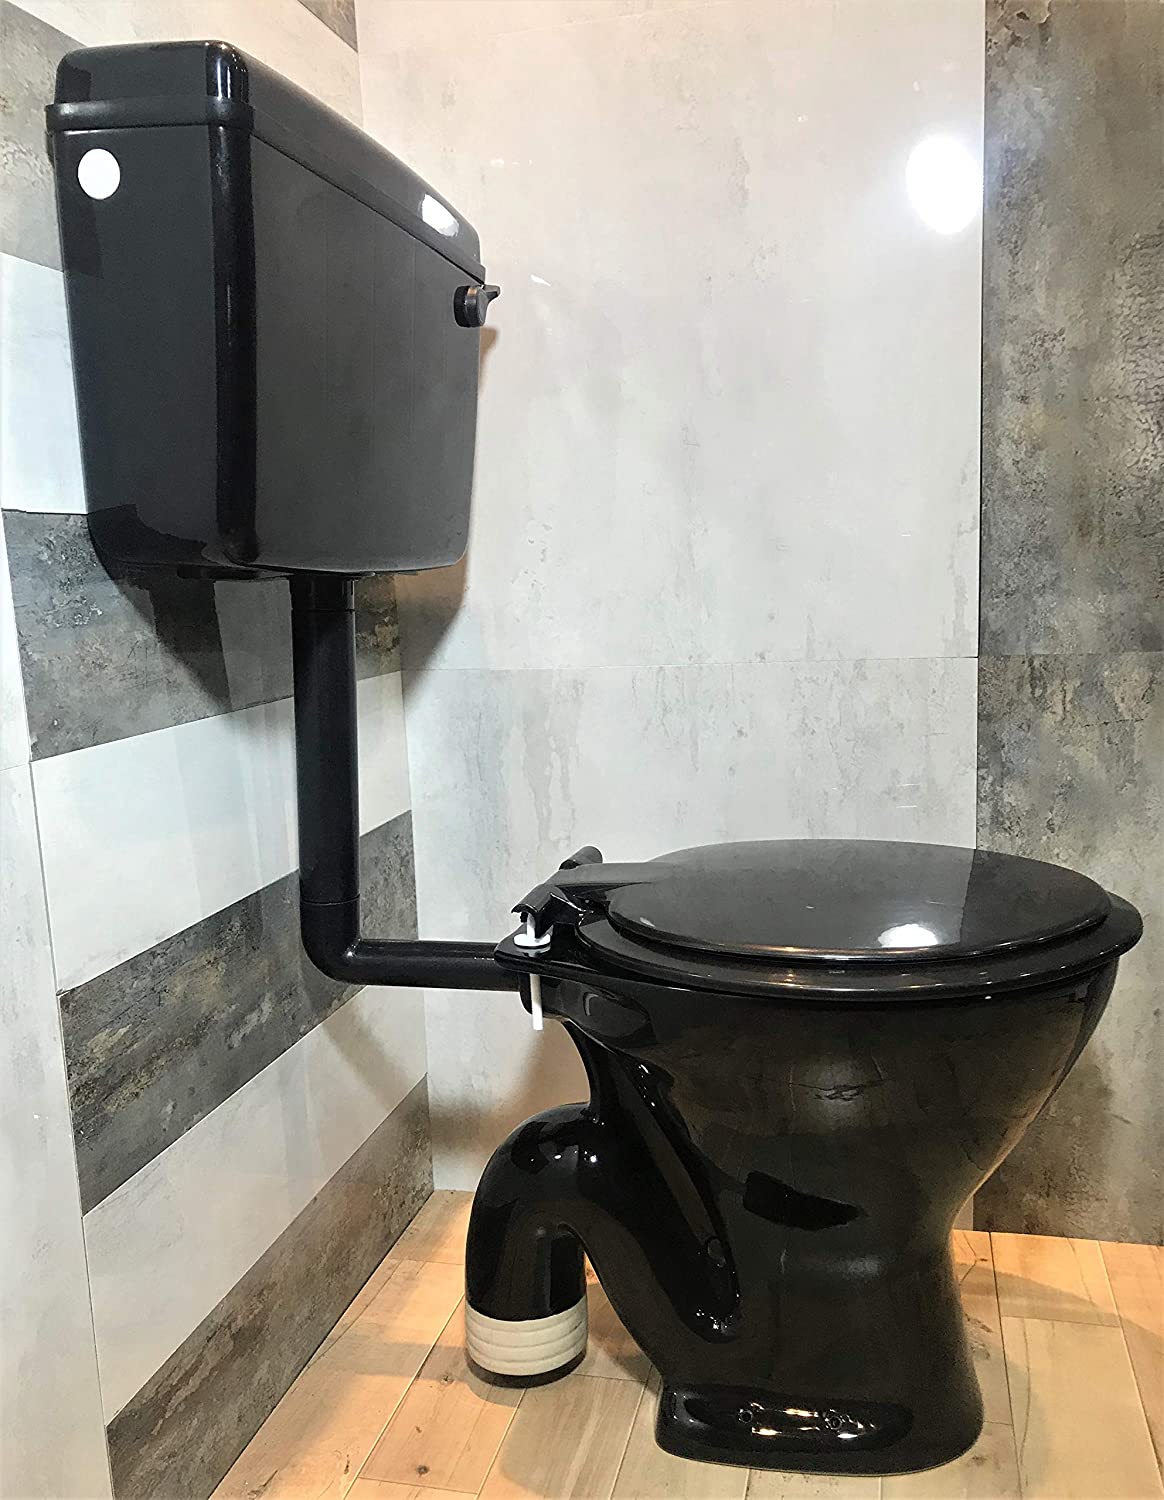 InArt Combo Ceramic Floor Mounted European Western Water Closet Toilet Commode EWC S Trap Set Black - InArt-Studio